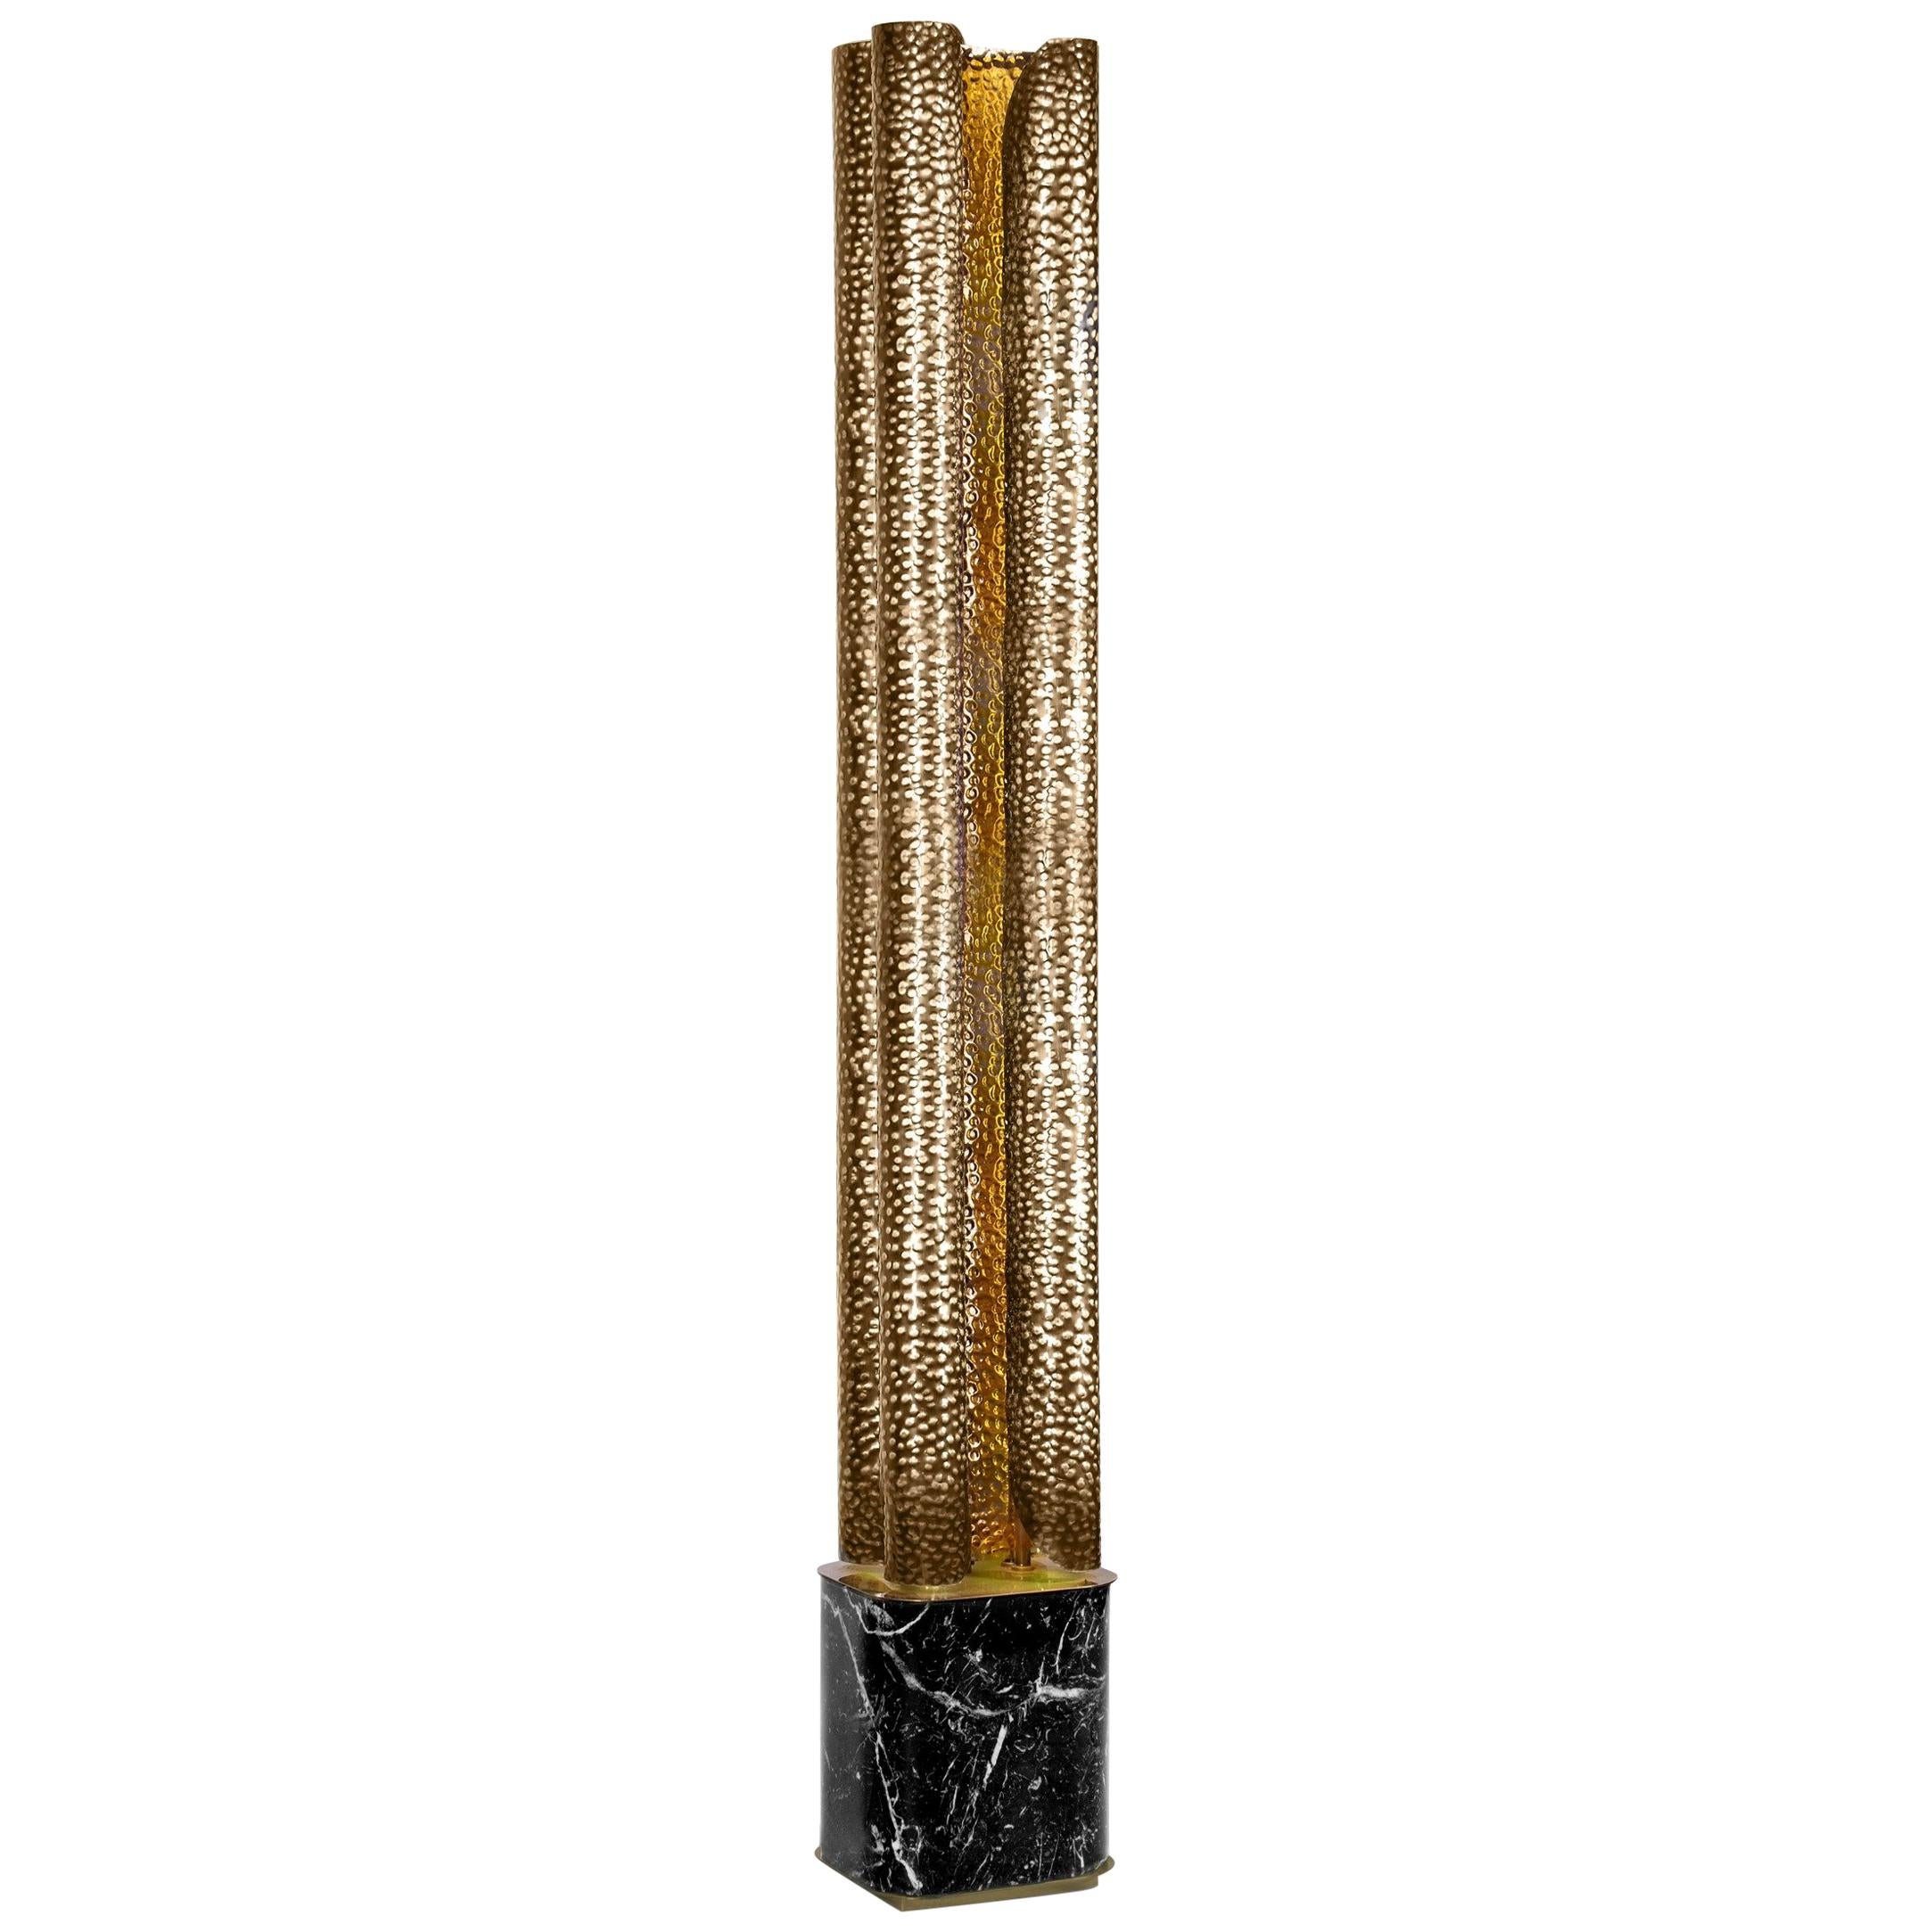 Vellum Floor Lamp in Hammered Aged Brass by Brabbu For Sale